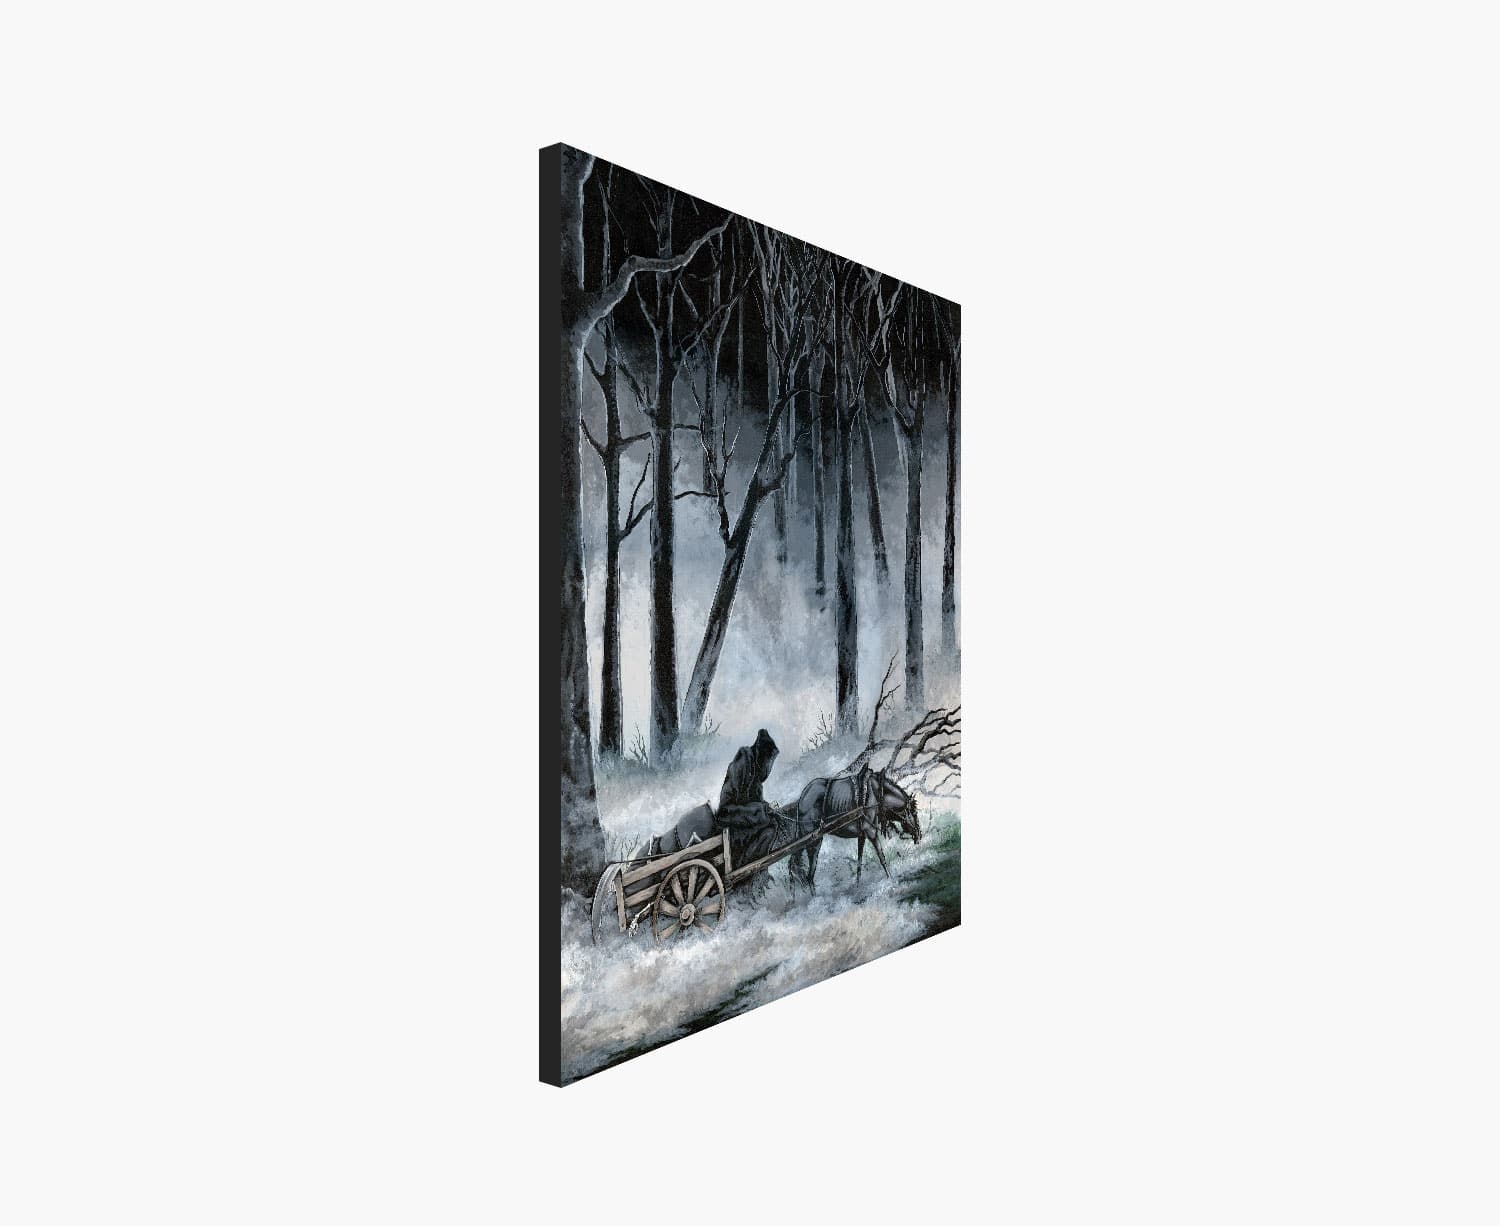 Print of a Grim Reaper on a Horse Drawn Wagon Riding through a Foggy Forest